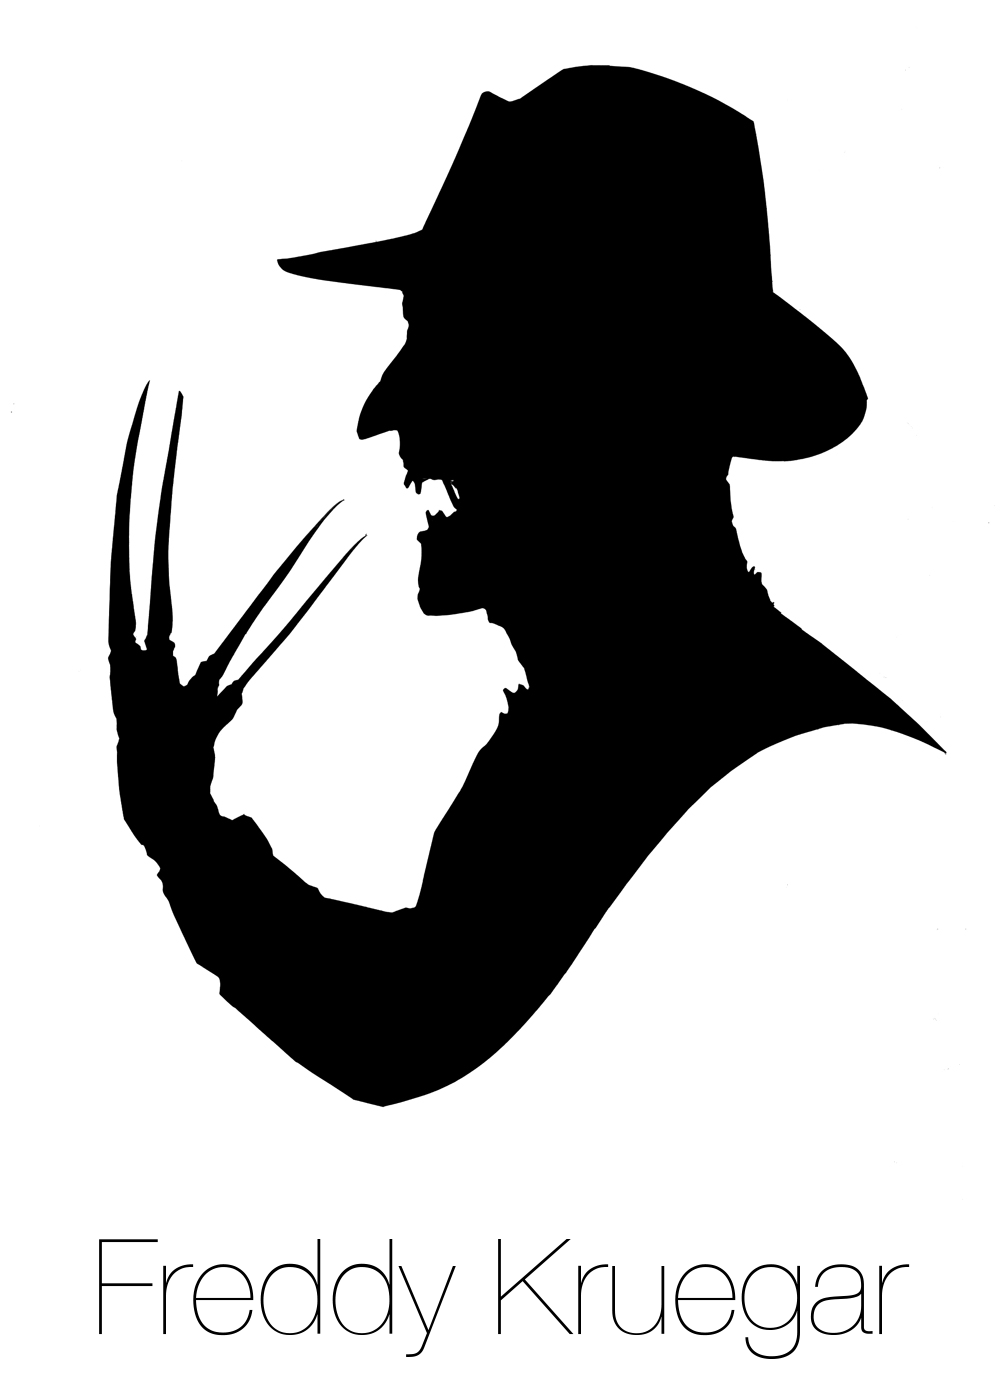 Freddy Krueger Logo - Freddy Krueger silhouette | Happy Horror Days in 2019 | Pinterest ...